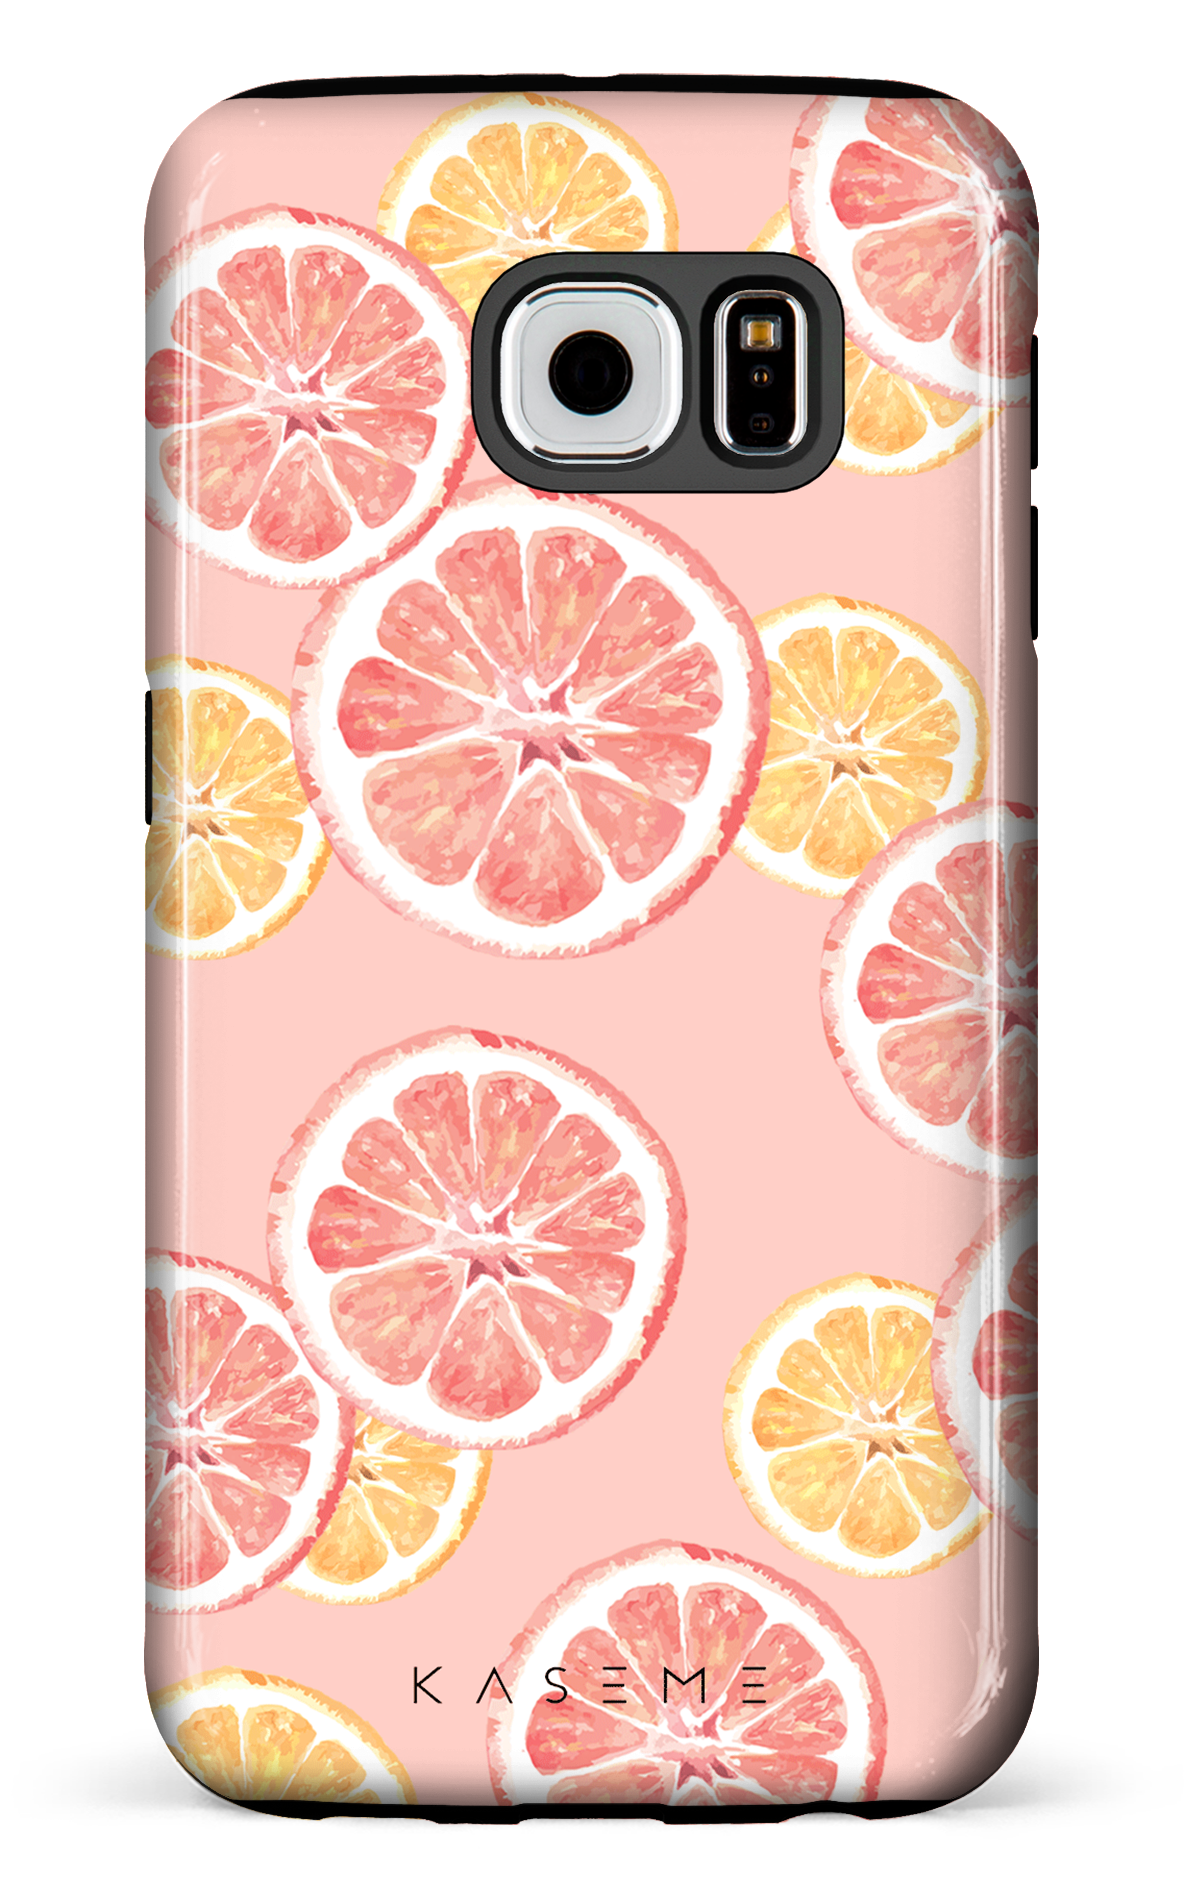 Pink Lemonade phone case - Galaxy S6